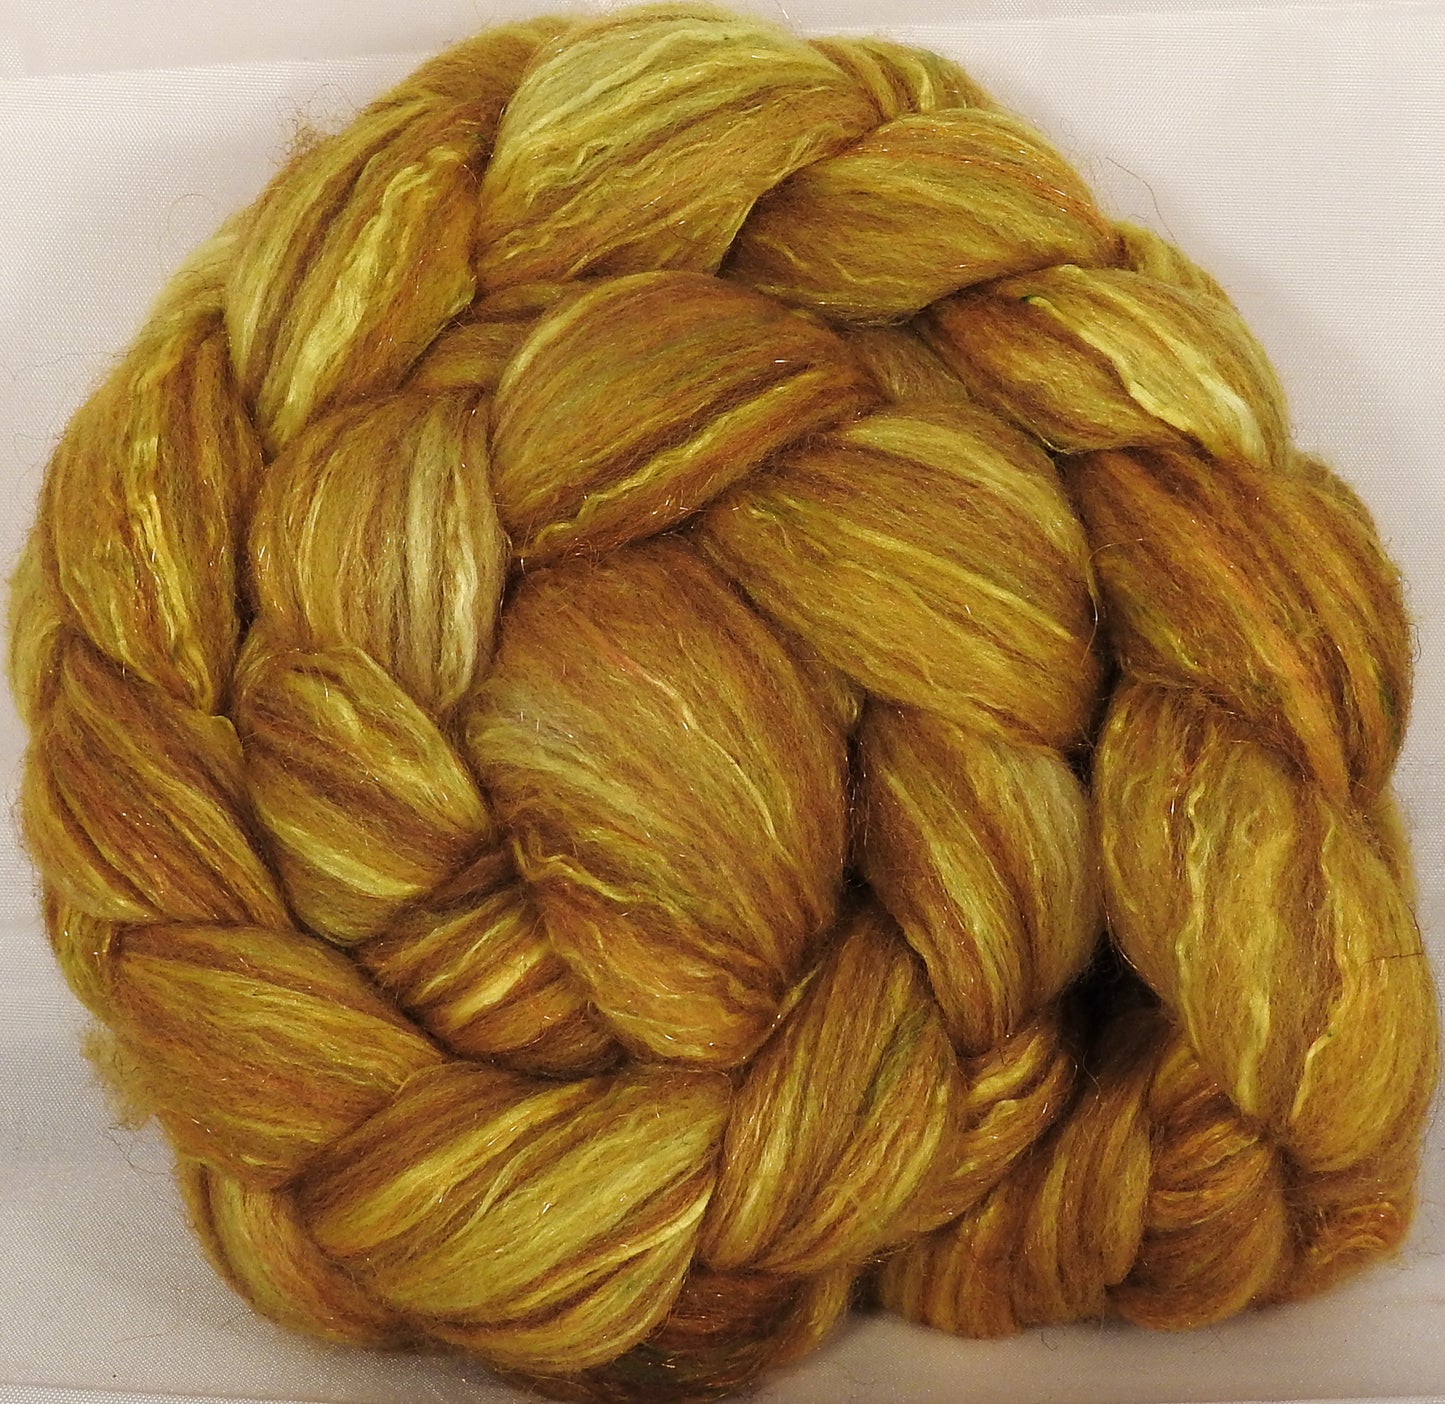 Batt in a Braid #7 -Sunflower-(5.4 oz.)Polwarth/ Manx / Mulberry silk/ Firestar (30/30/30/10) - Inglenook Fibers